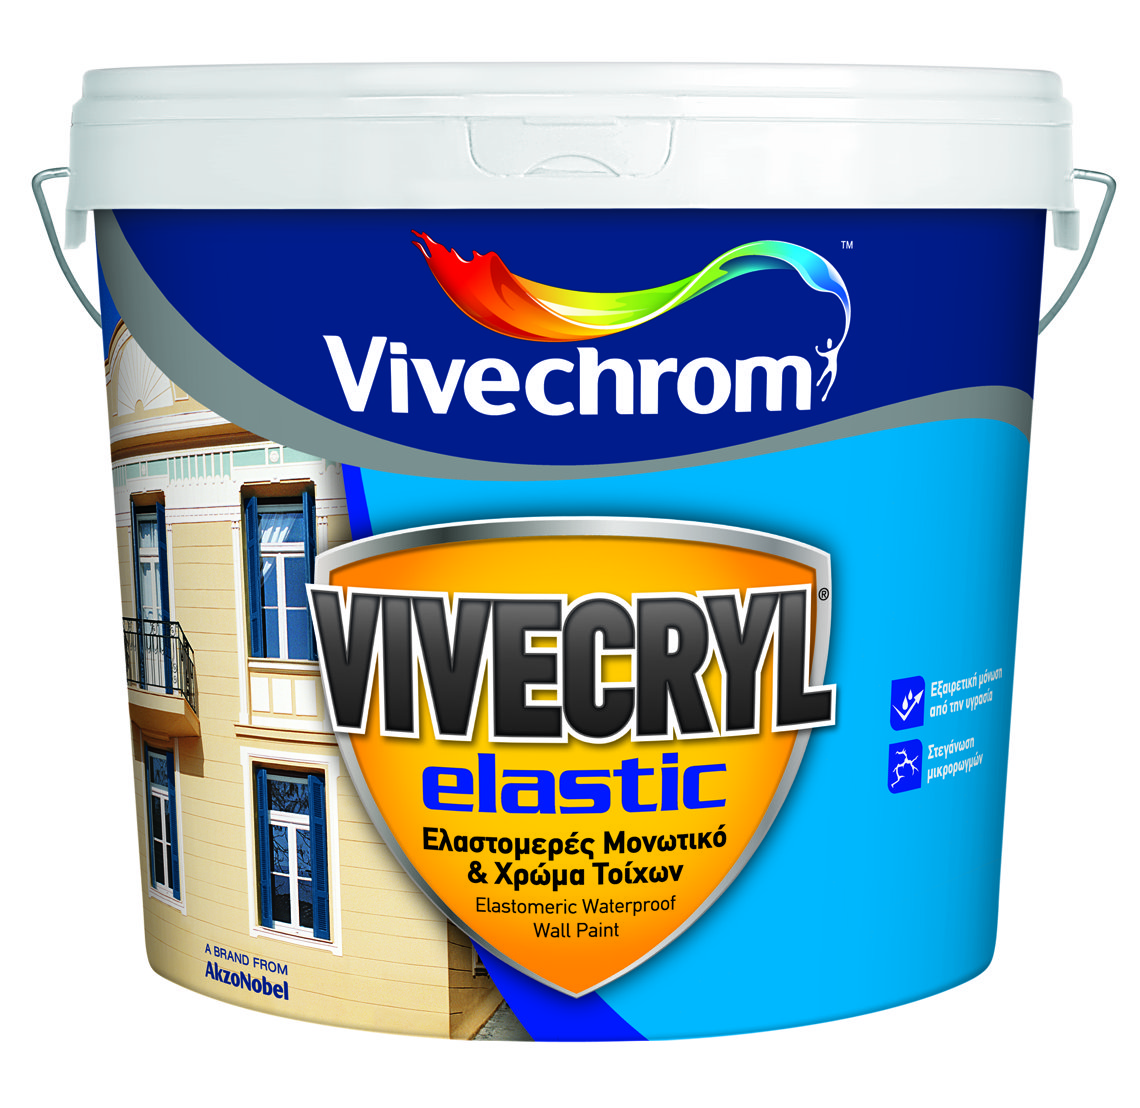 Vivechrom Vivecryl Ελαστομερές Οικολογικό Ακρυλικό Χρώμα Matt Finish Λευκό 3L